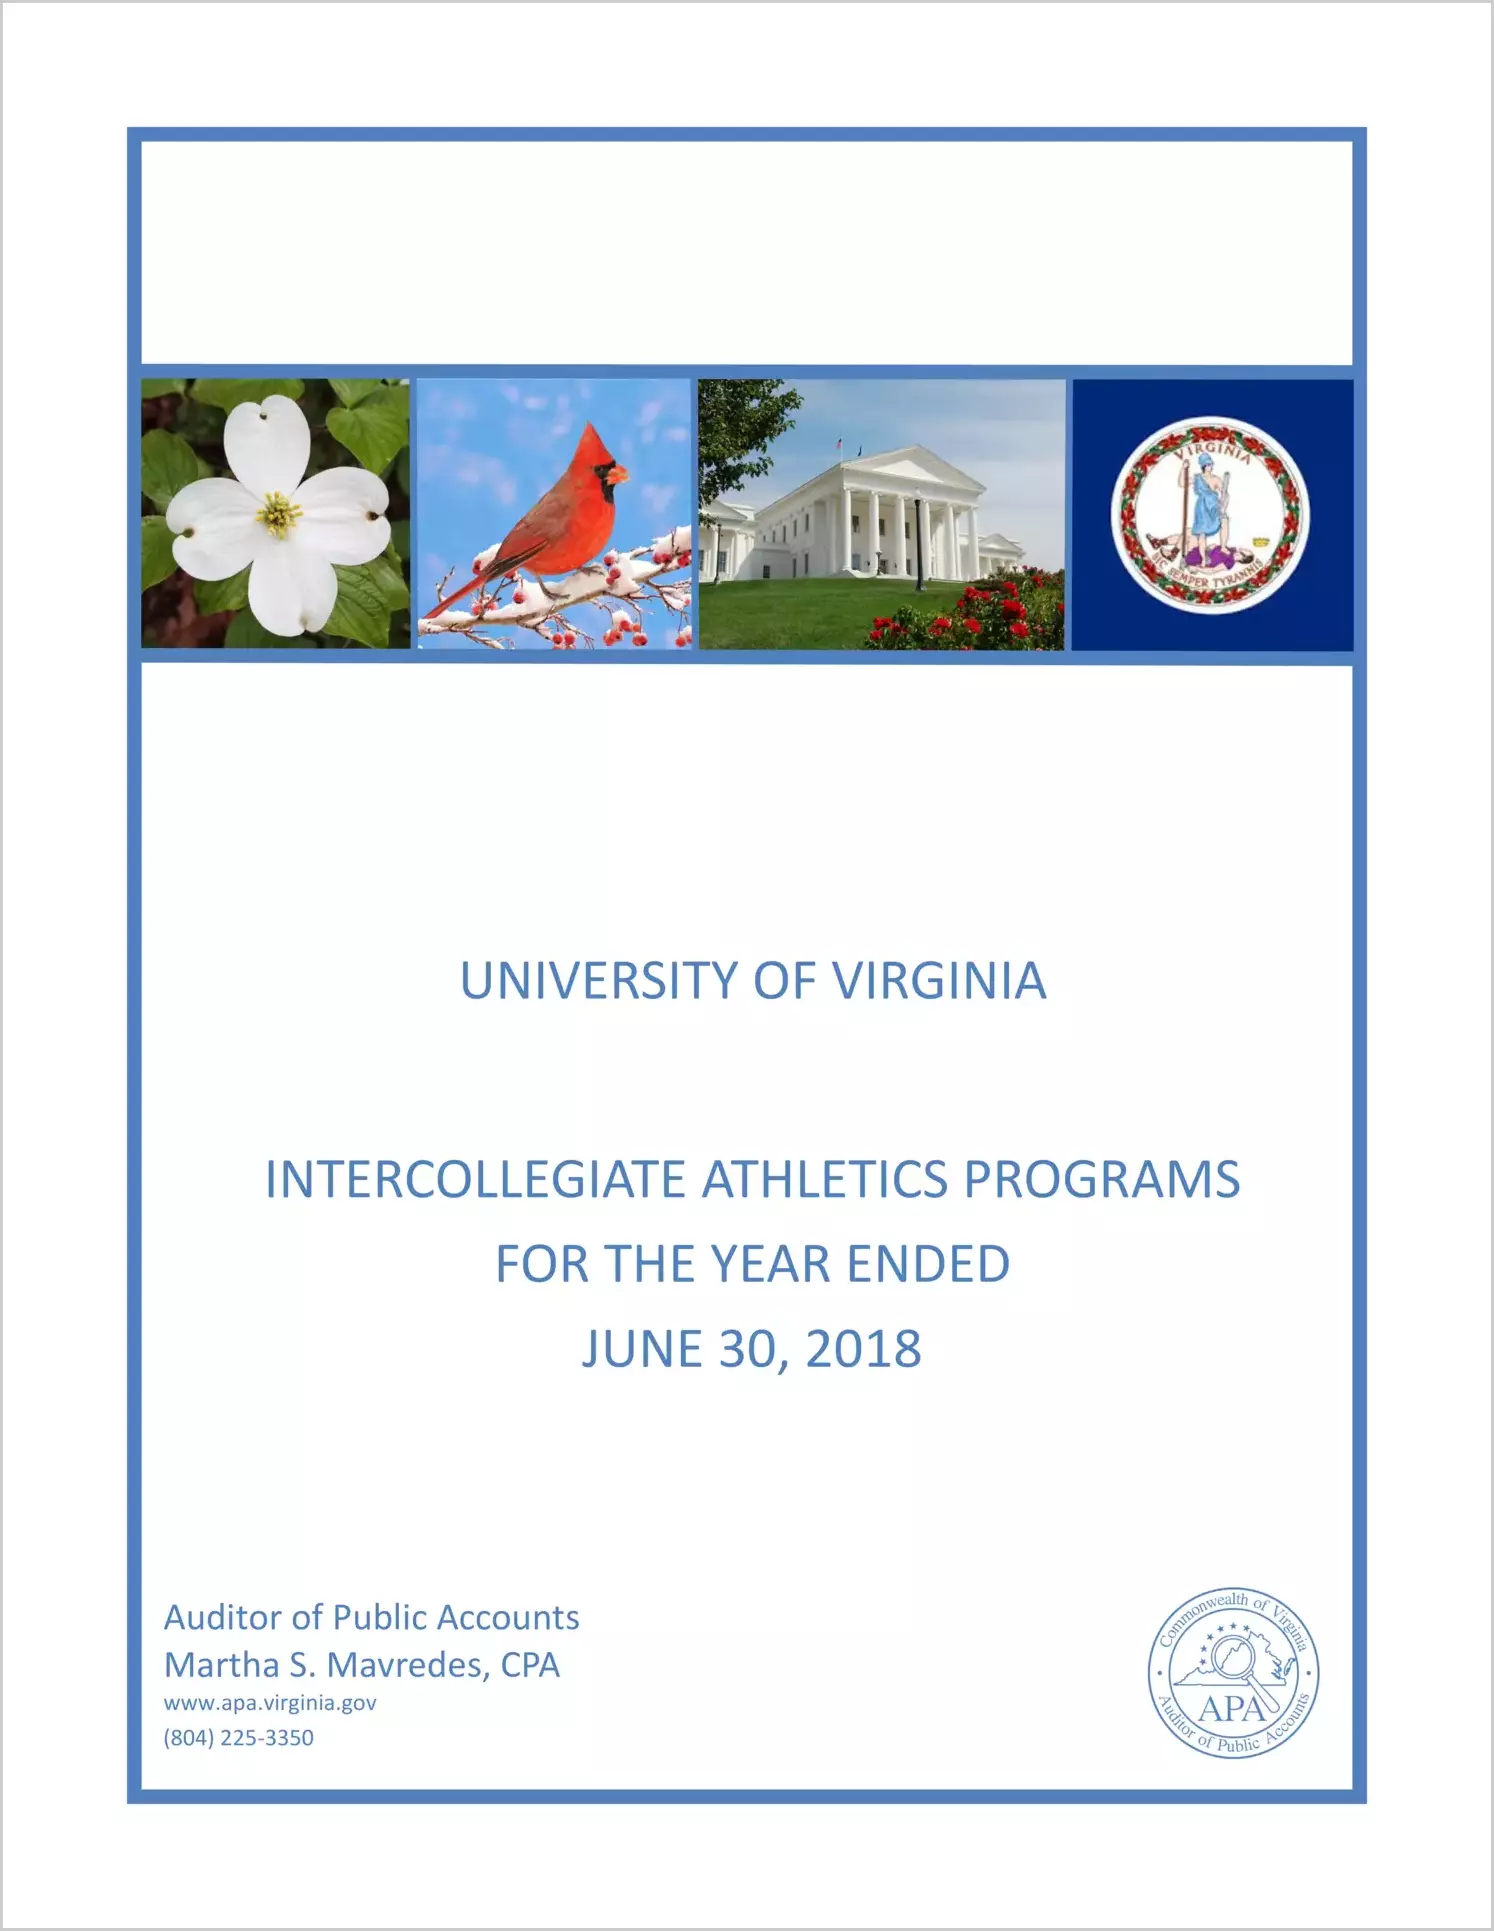 University of Virginia Intercollegiate Athletics Programs for the year ended June 30, 2018